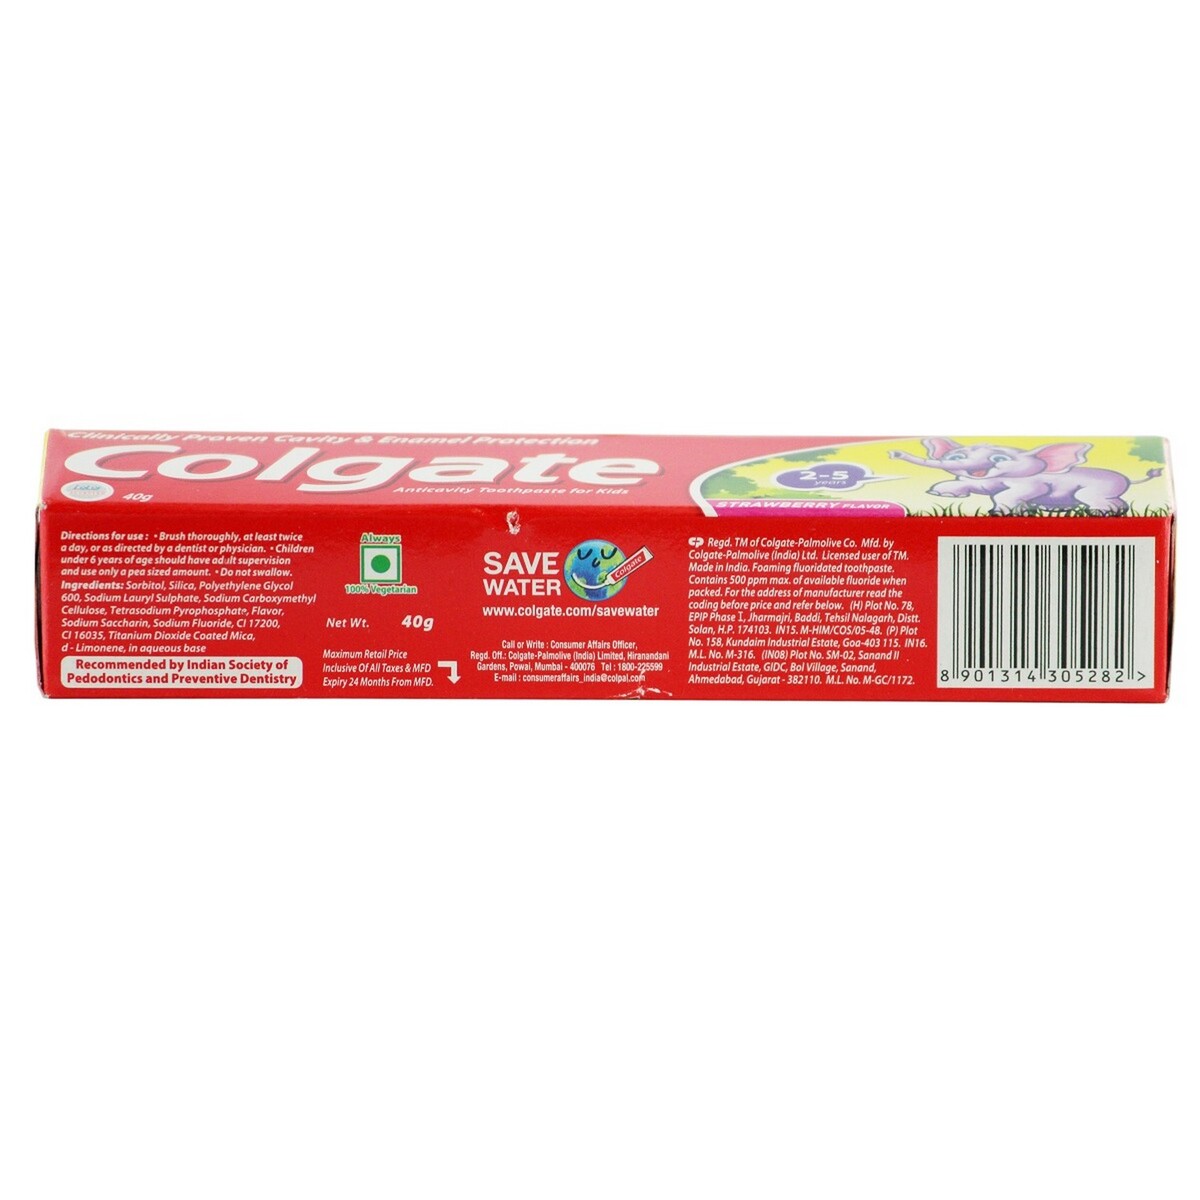 Colgate Toothpaste Kids Strawberry 40g